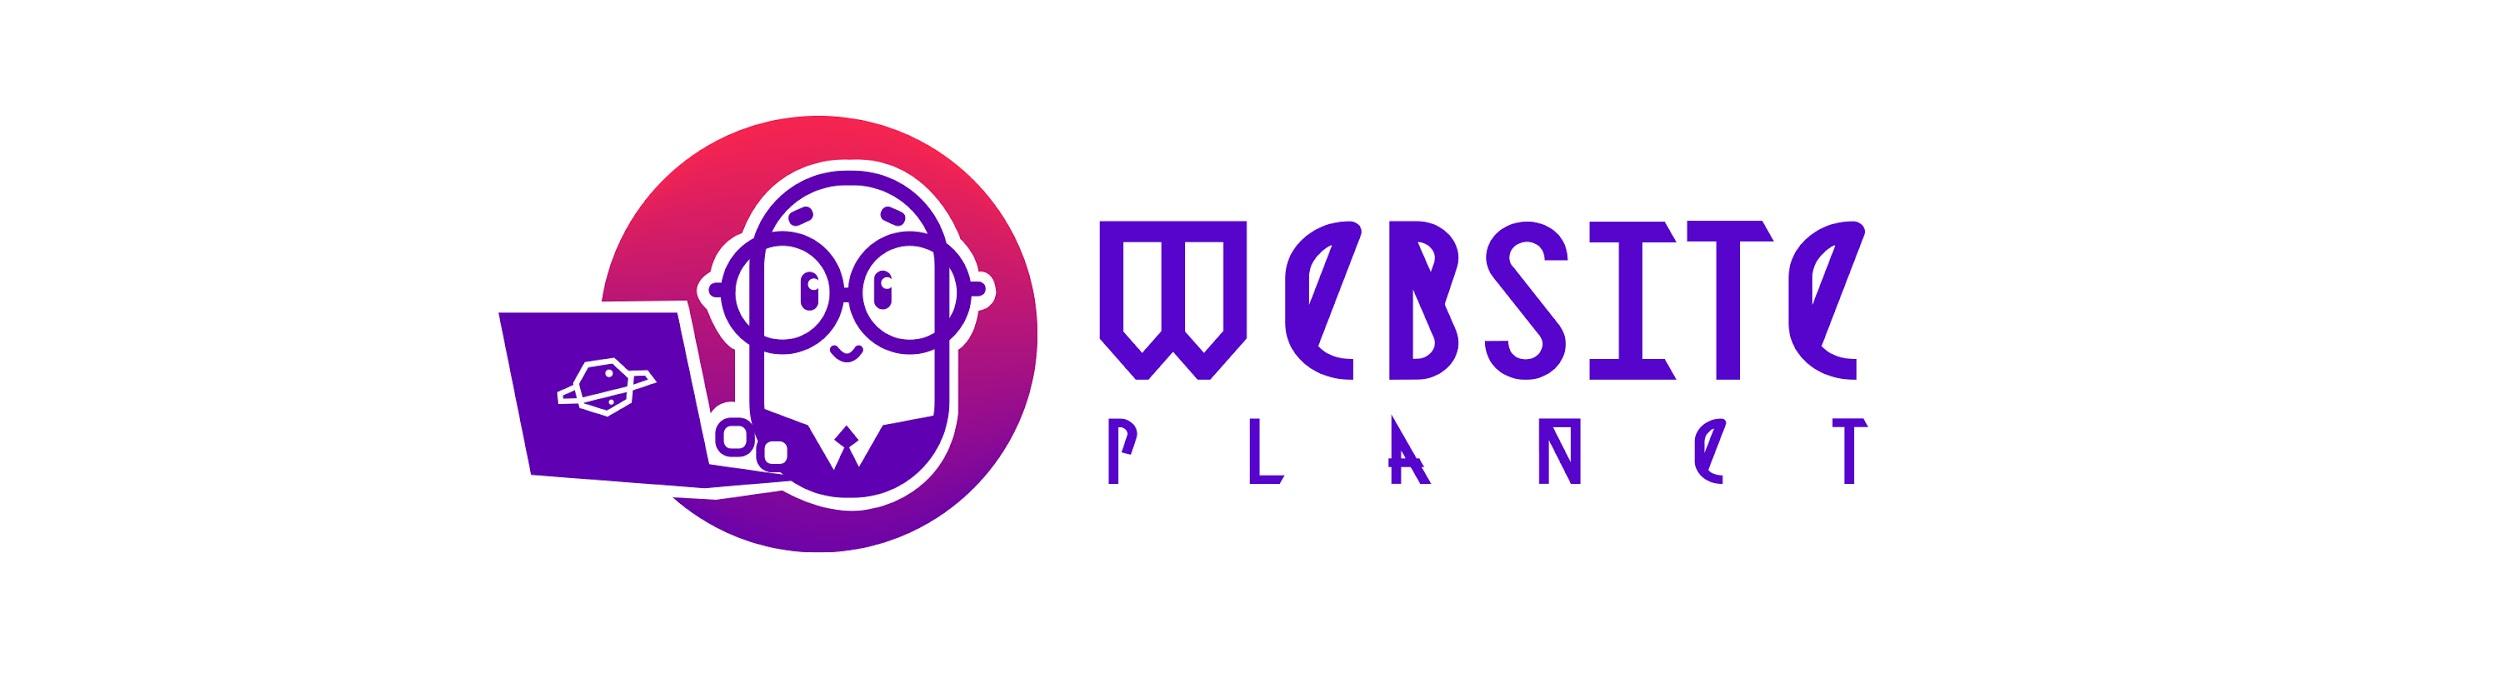 Website Planet sample logo